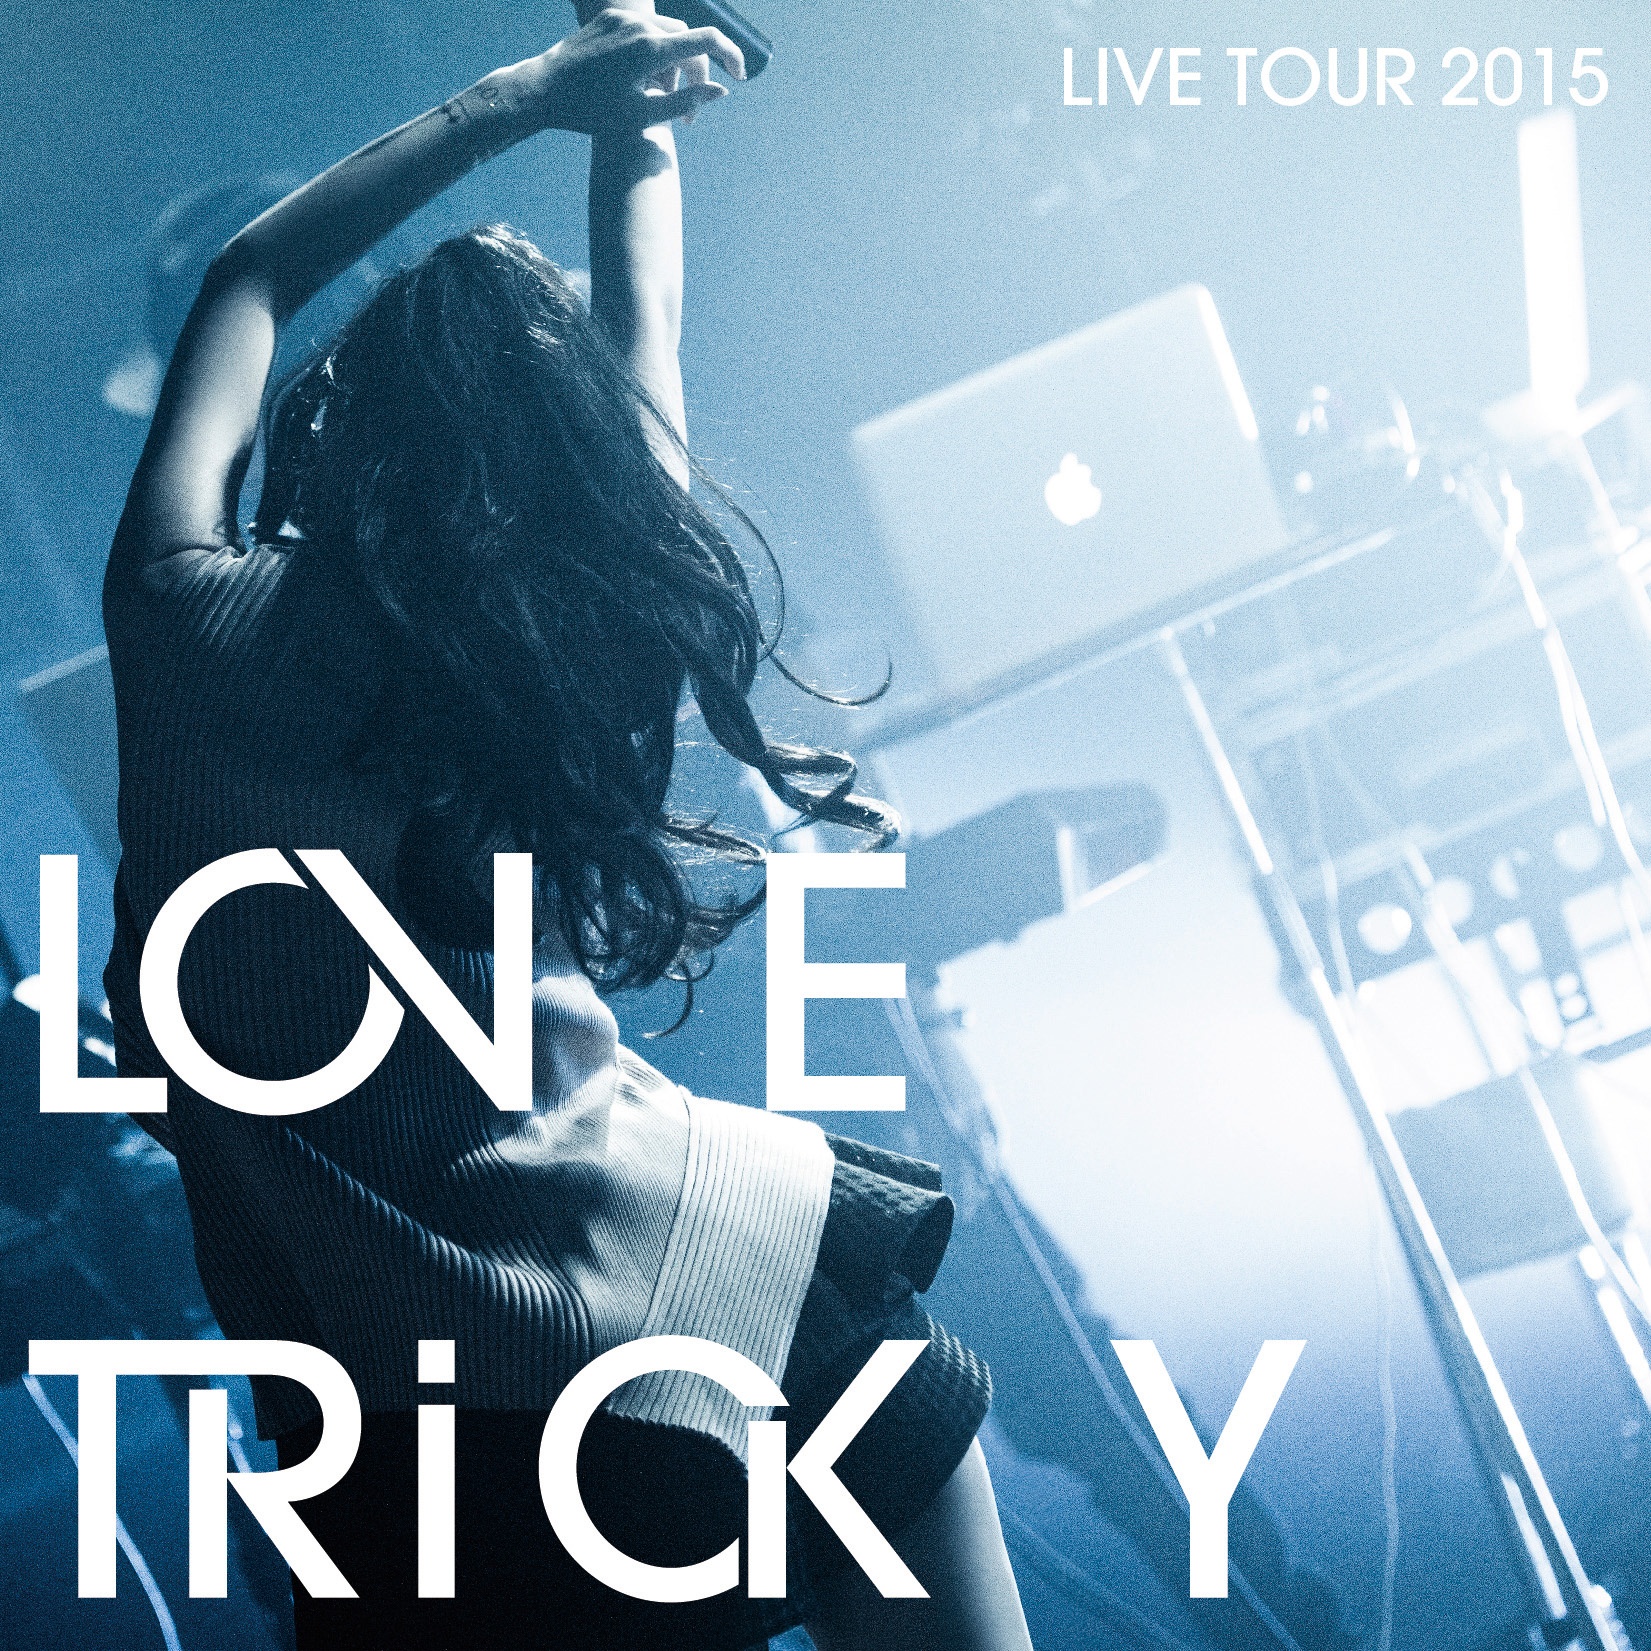 SMILY LOVE TRiCKY LIVE TOUR 2015 ti zhong jian